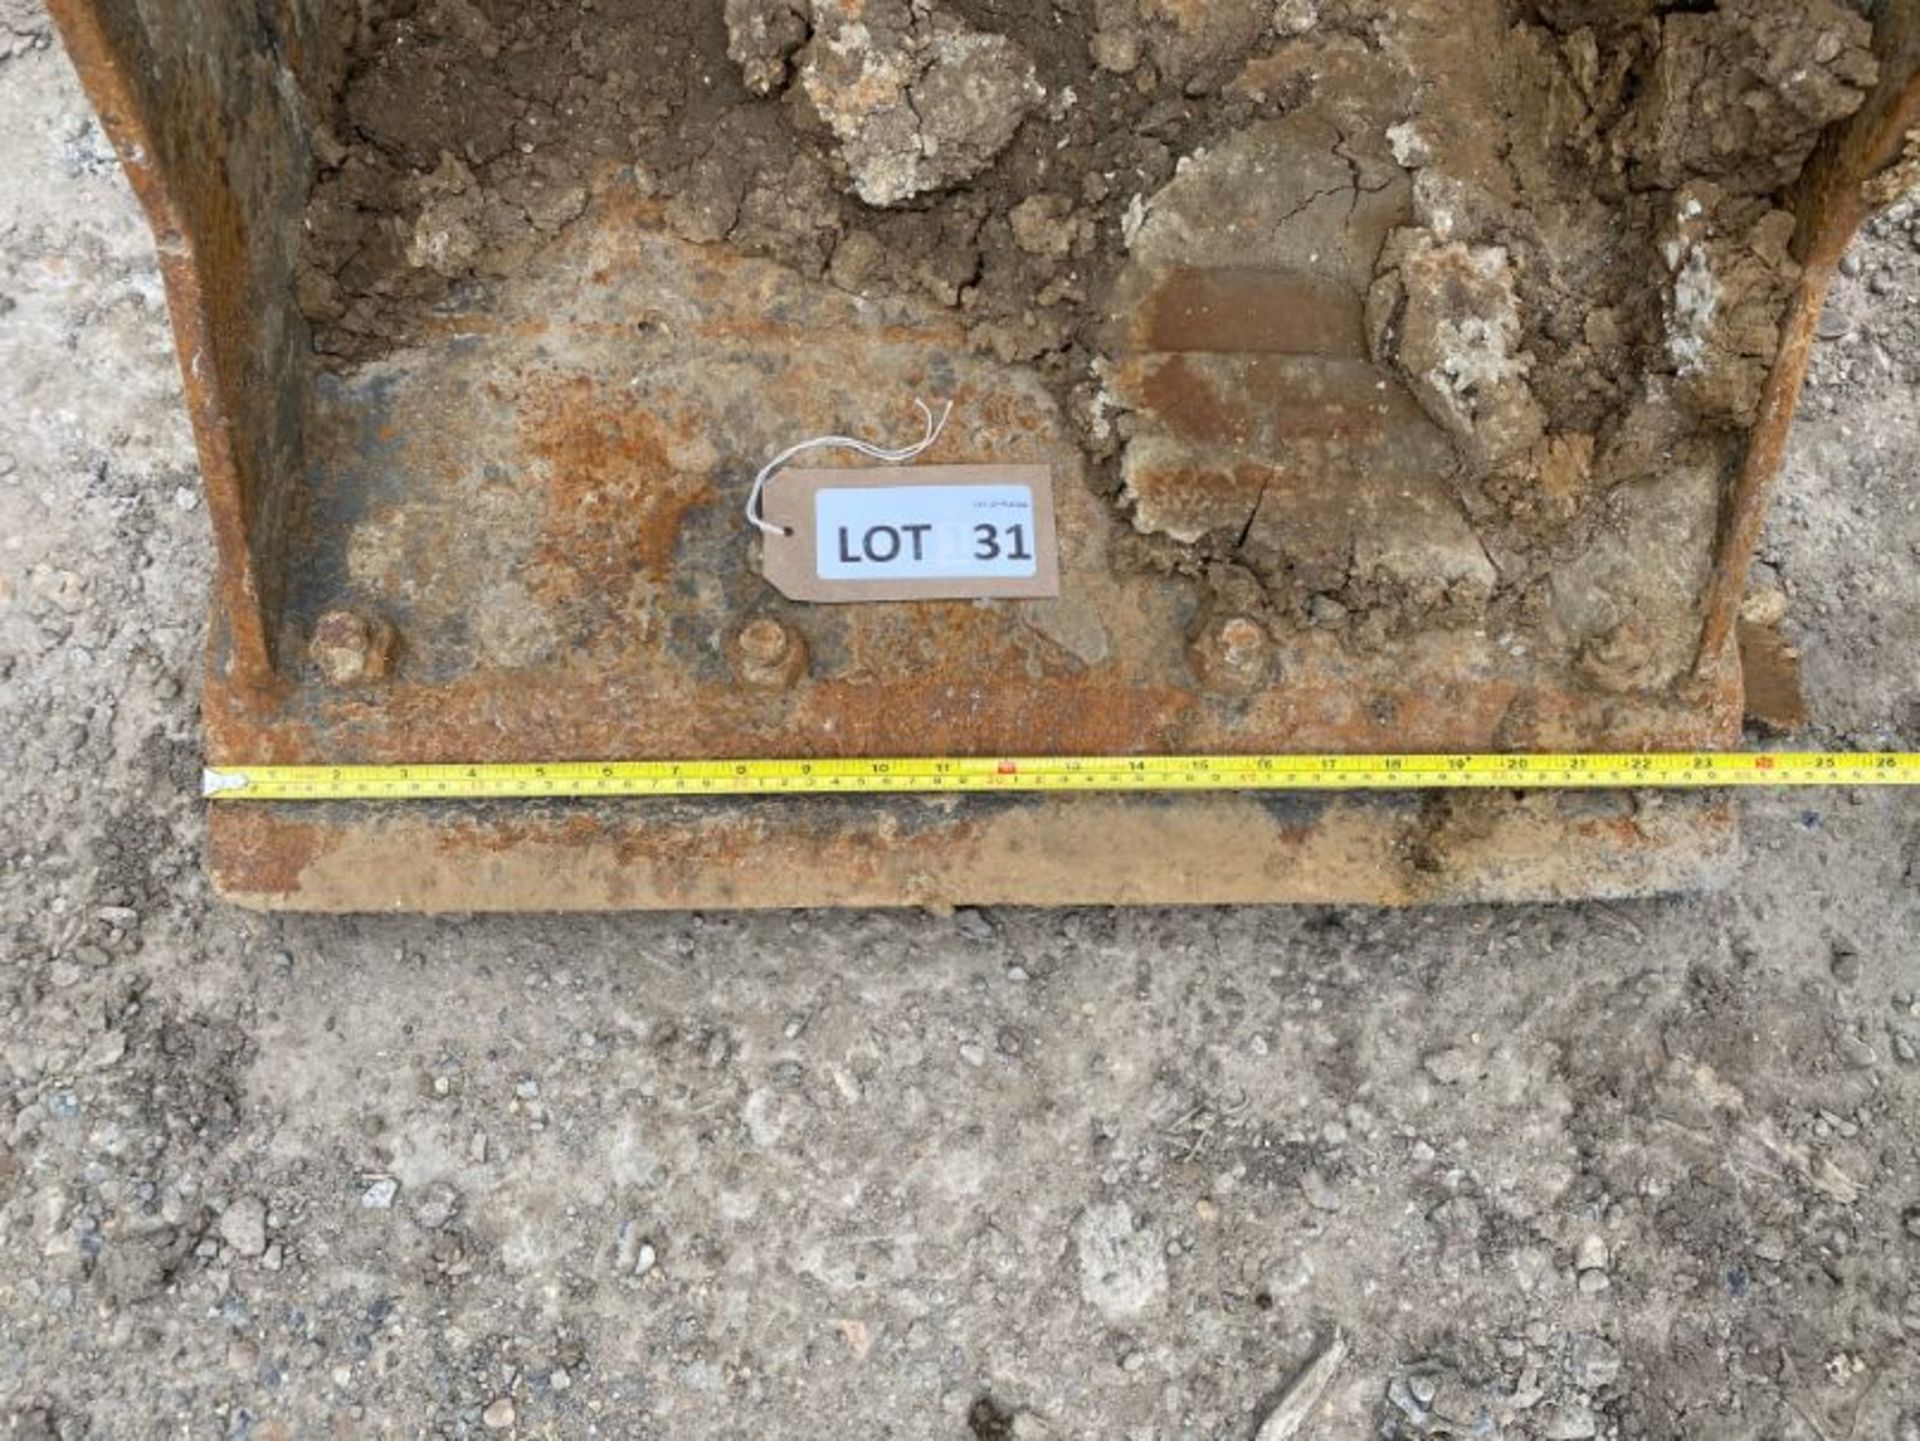 Strickland 24" excavator bucket (no age ID): 1.75" dia pin x 6" dipper x 10" between centres